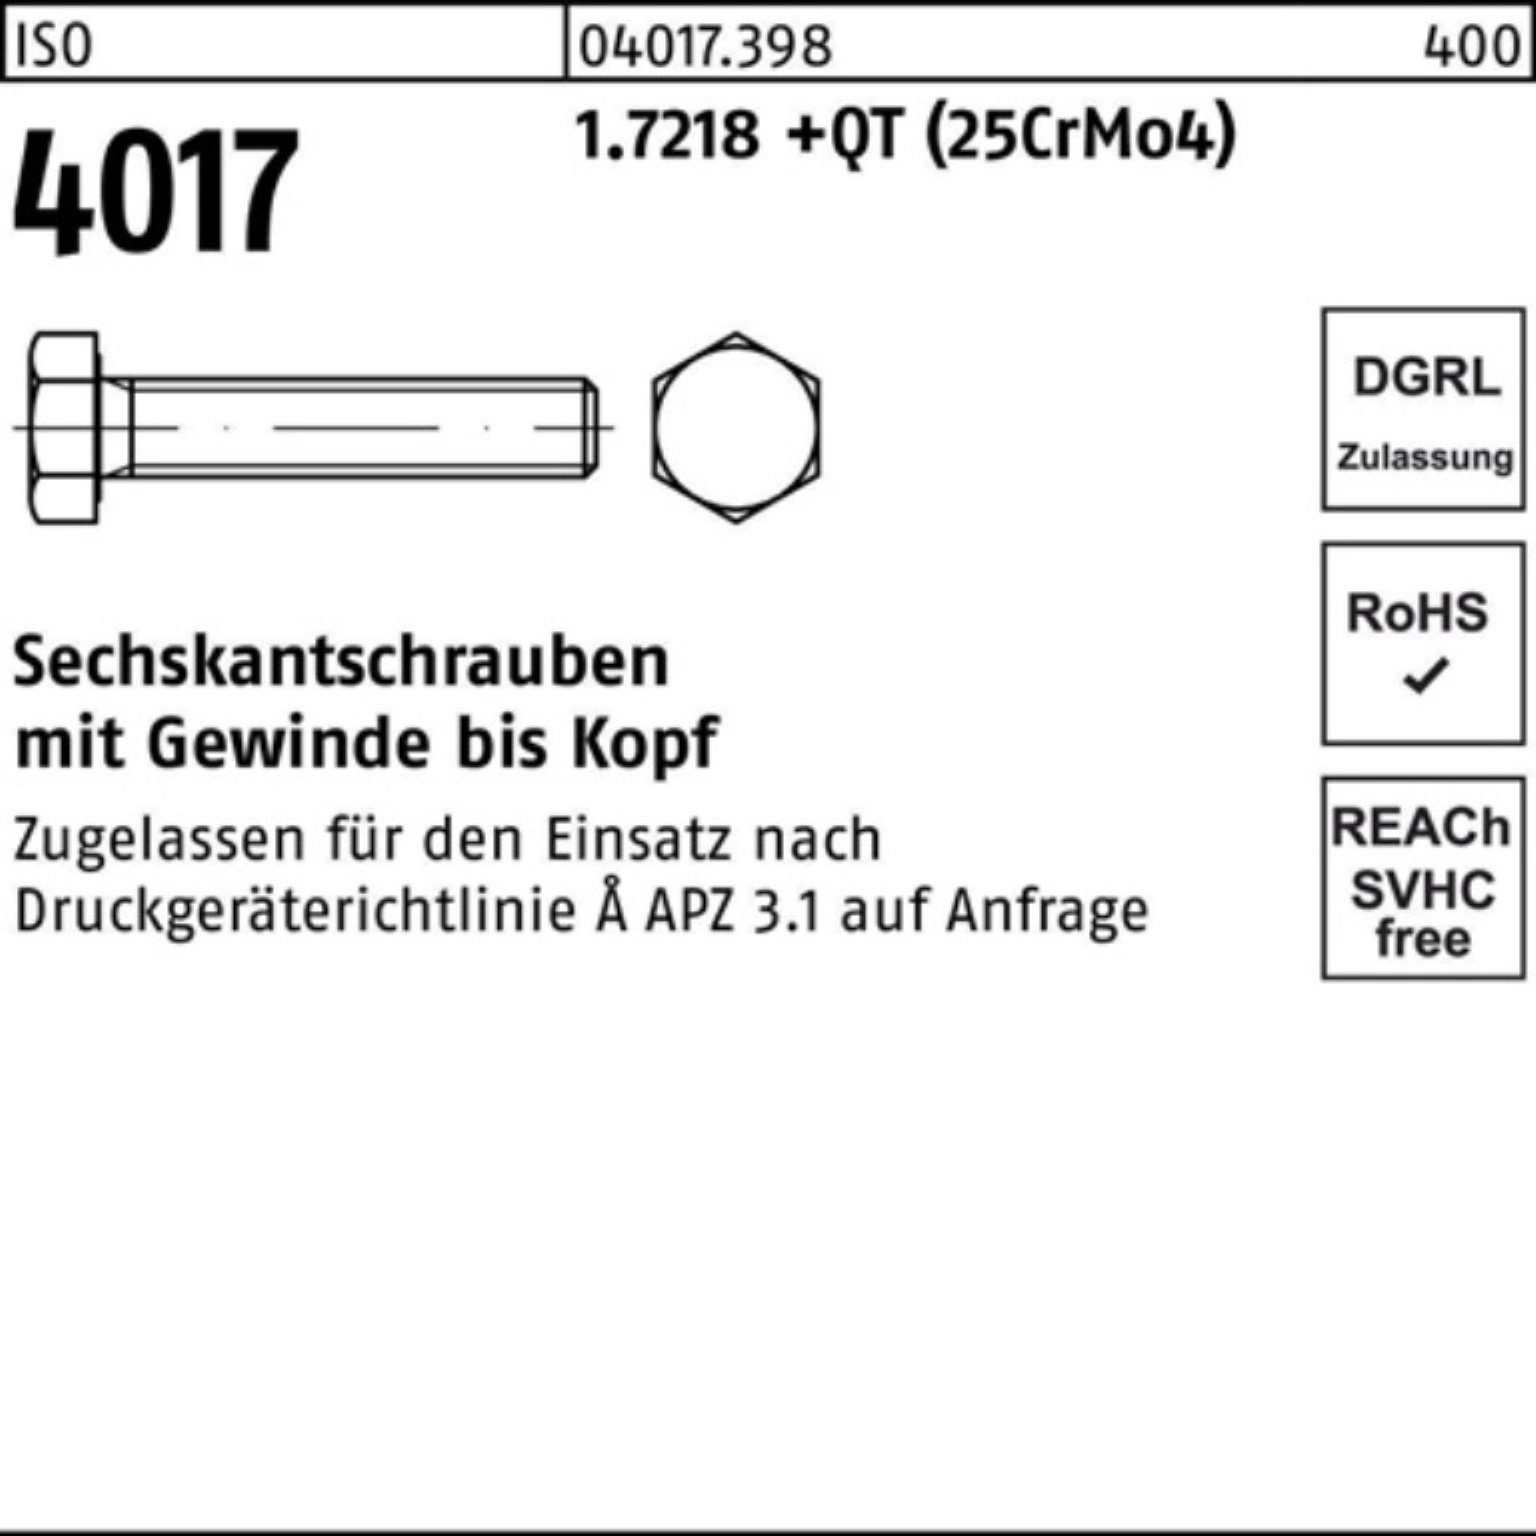 100er Sechskantschraube 55 1.7218 VG (25CrMo4) Pack Bufab 4017 Sechskantschraube M12x +QT ISO